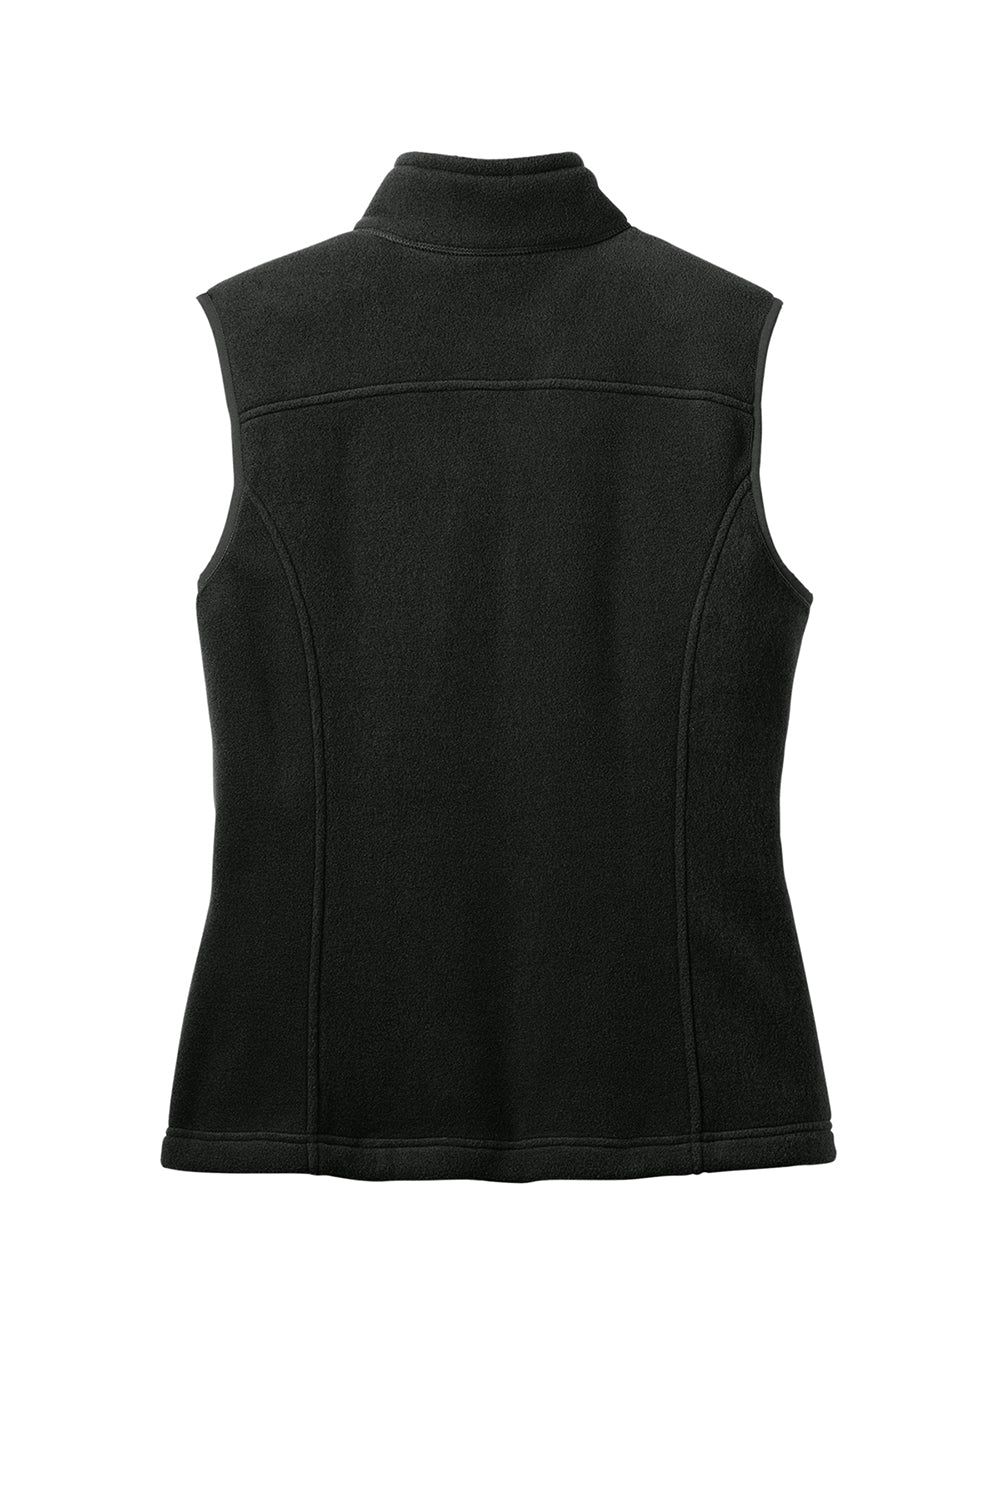 Eddie Bauer EB205 Womens Full Zip Fleece Vest Black Flat Back